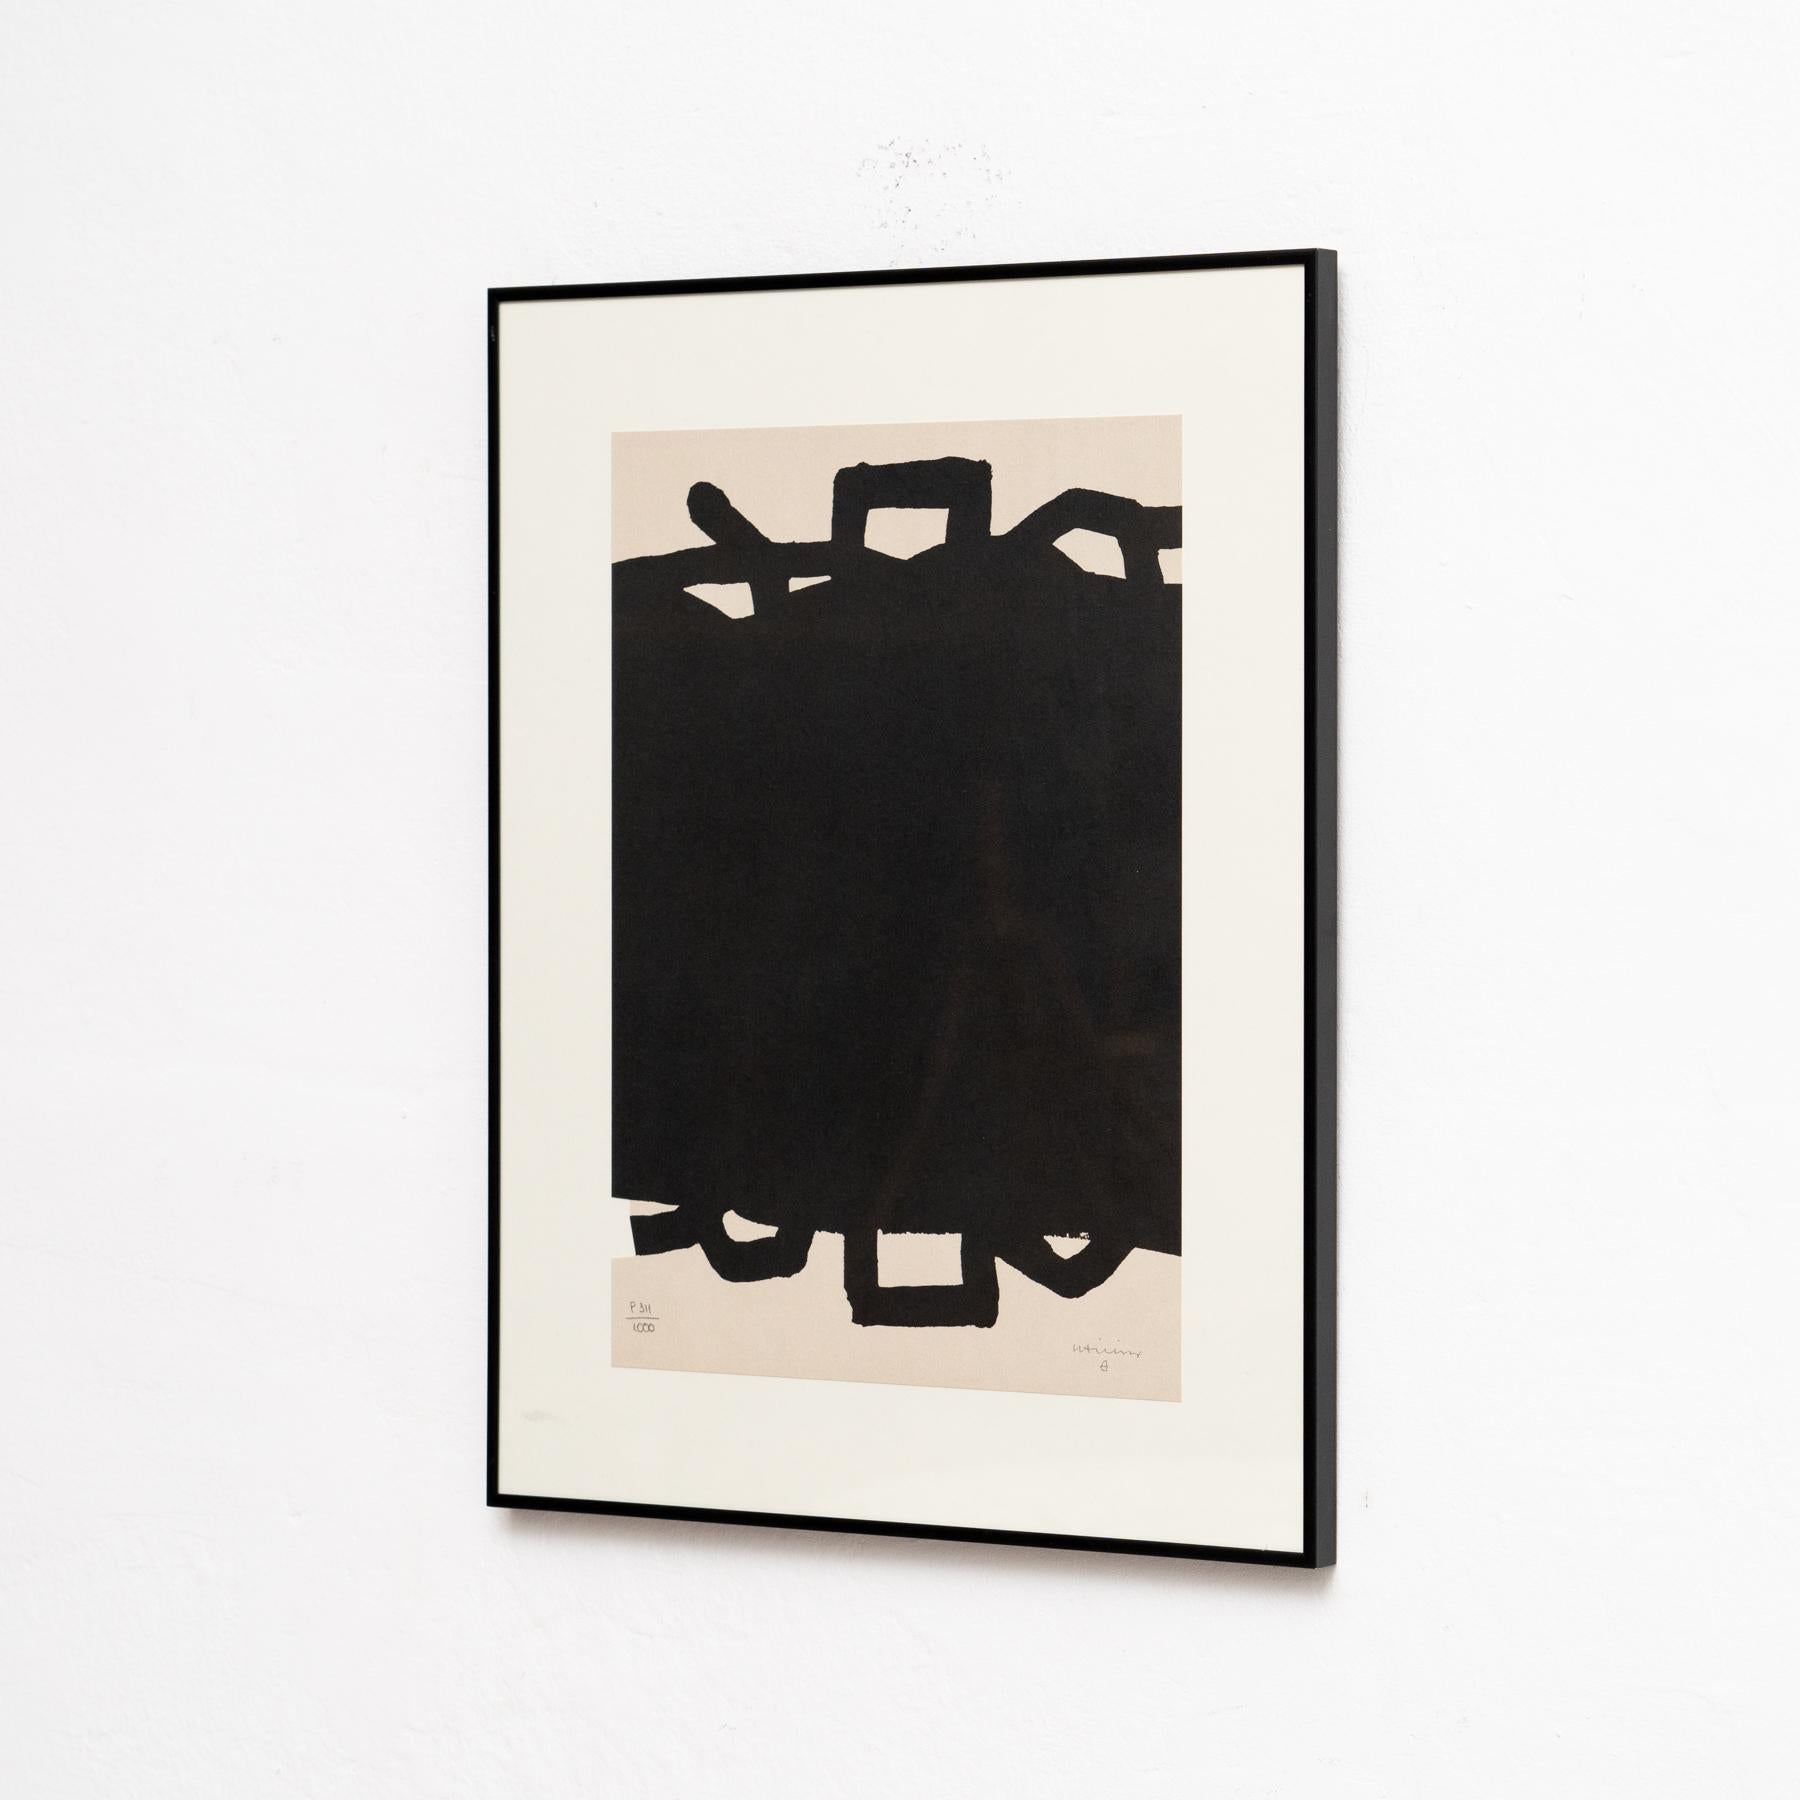 Eduardo Chillida's Abstract Odyssey: 